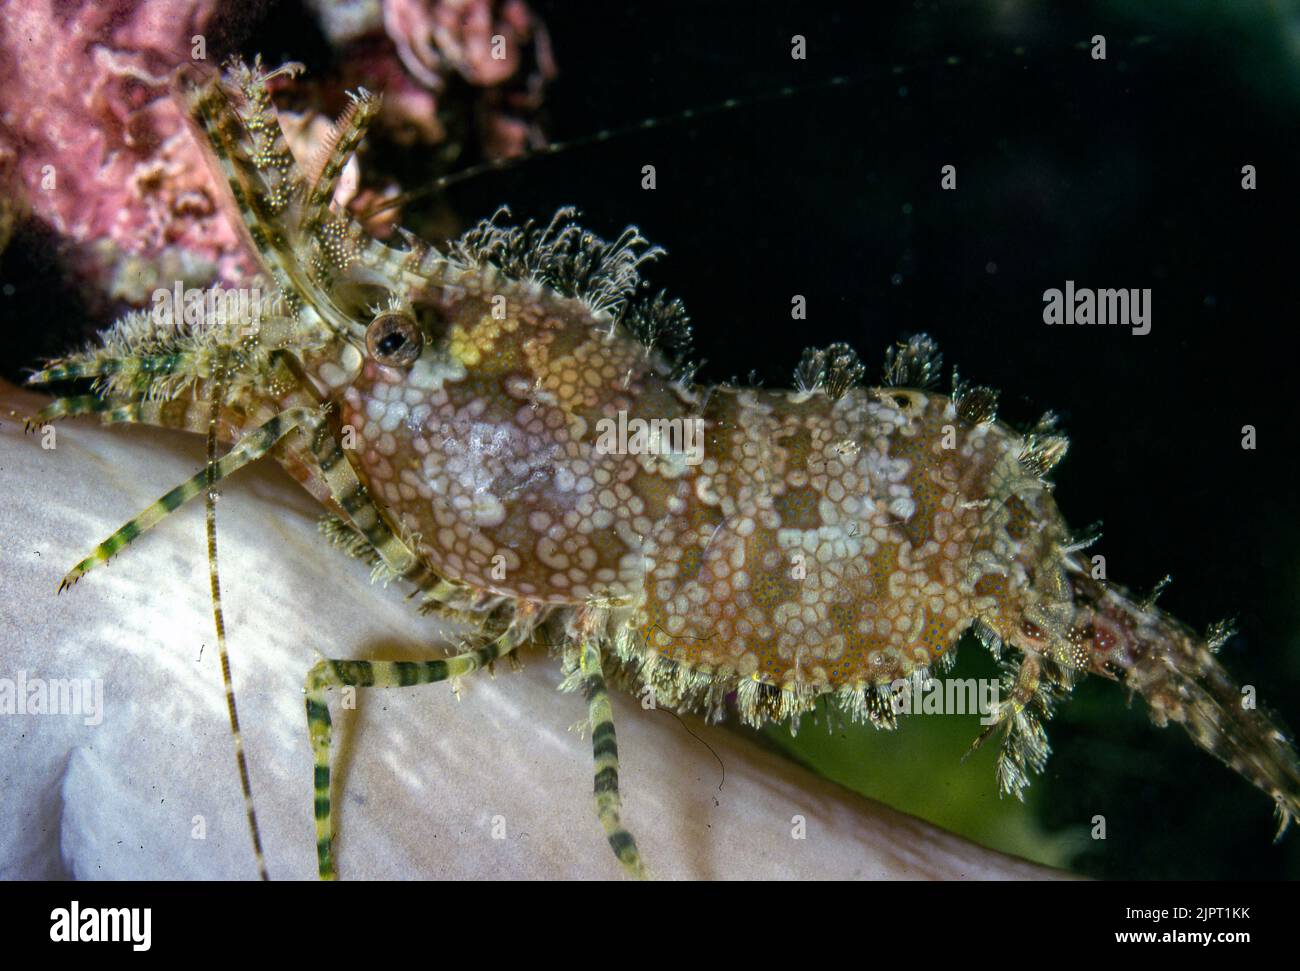 Marbled shrimp (Saron marmoratus, female) Stock Photo